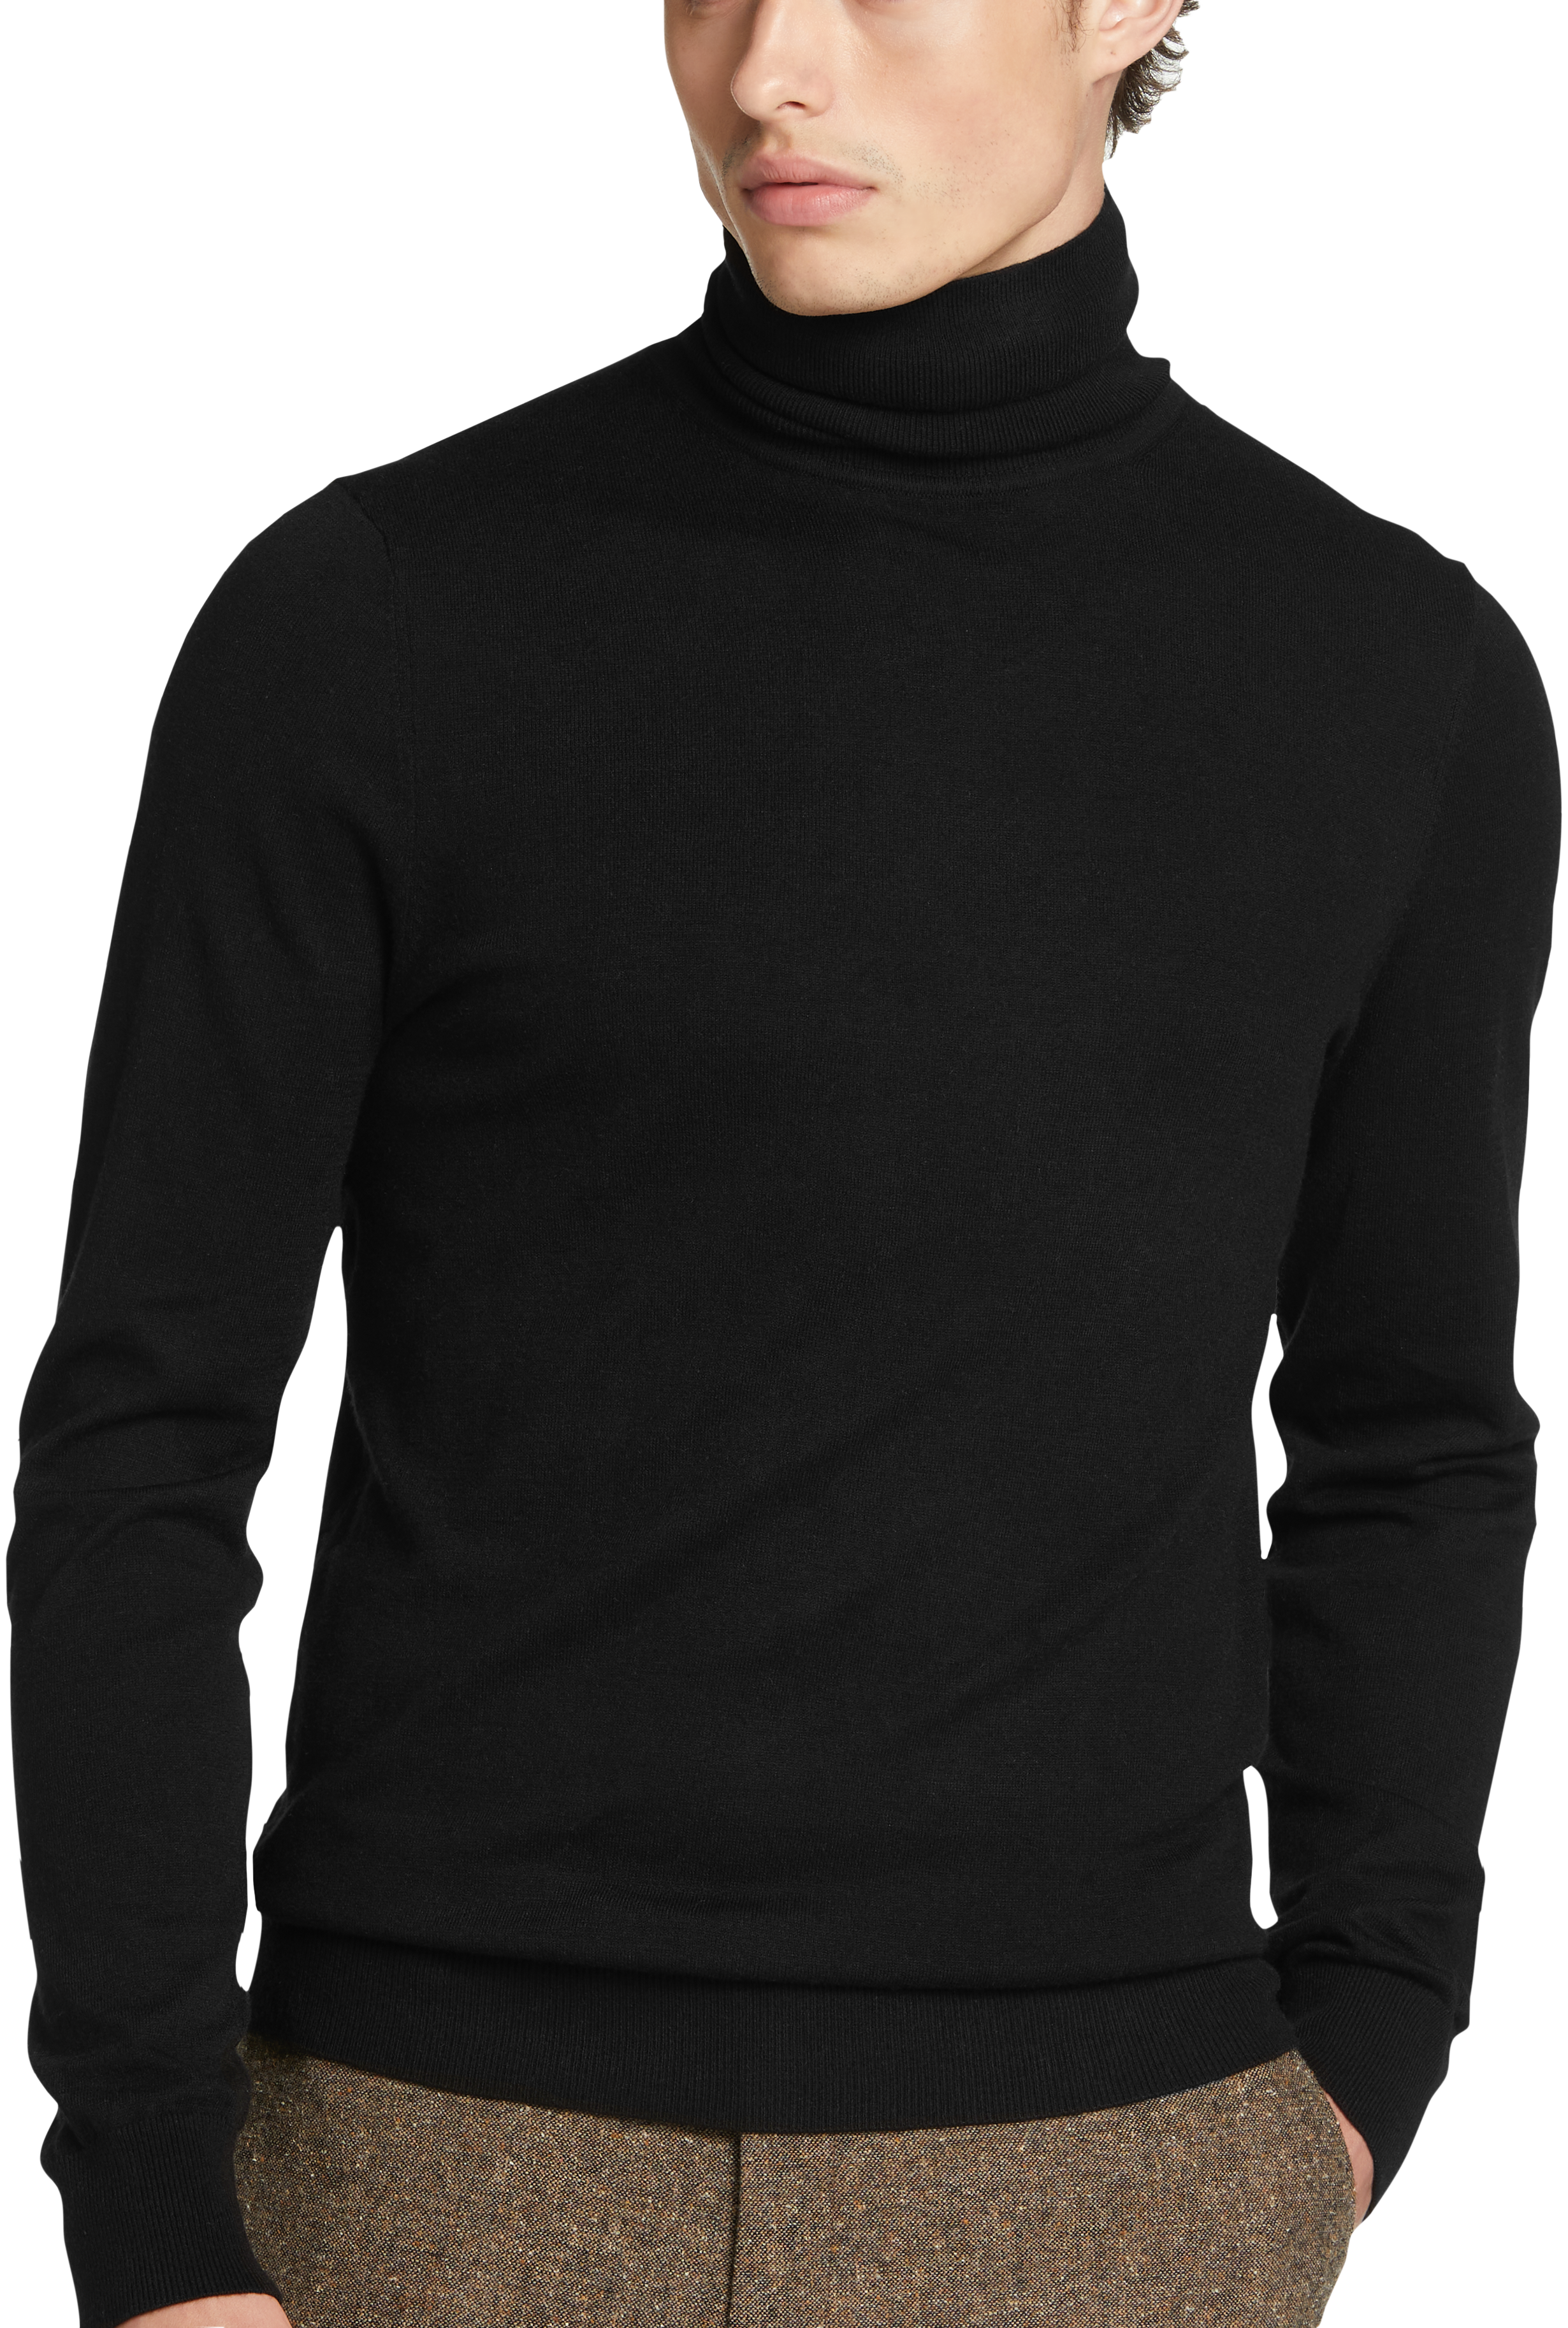 Men's Turtleneck Sweater, Men's Clearance